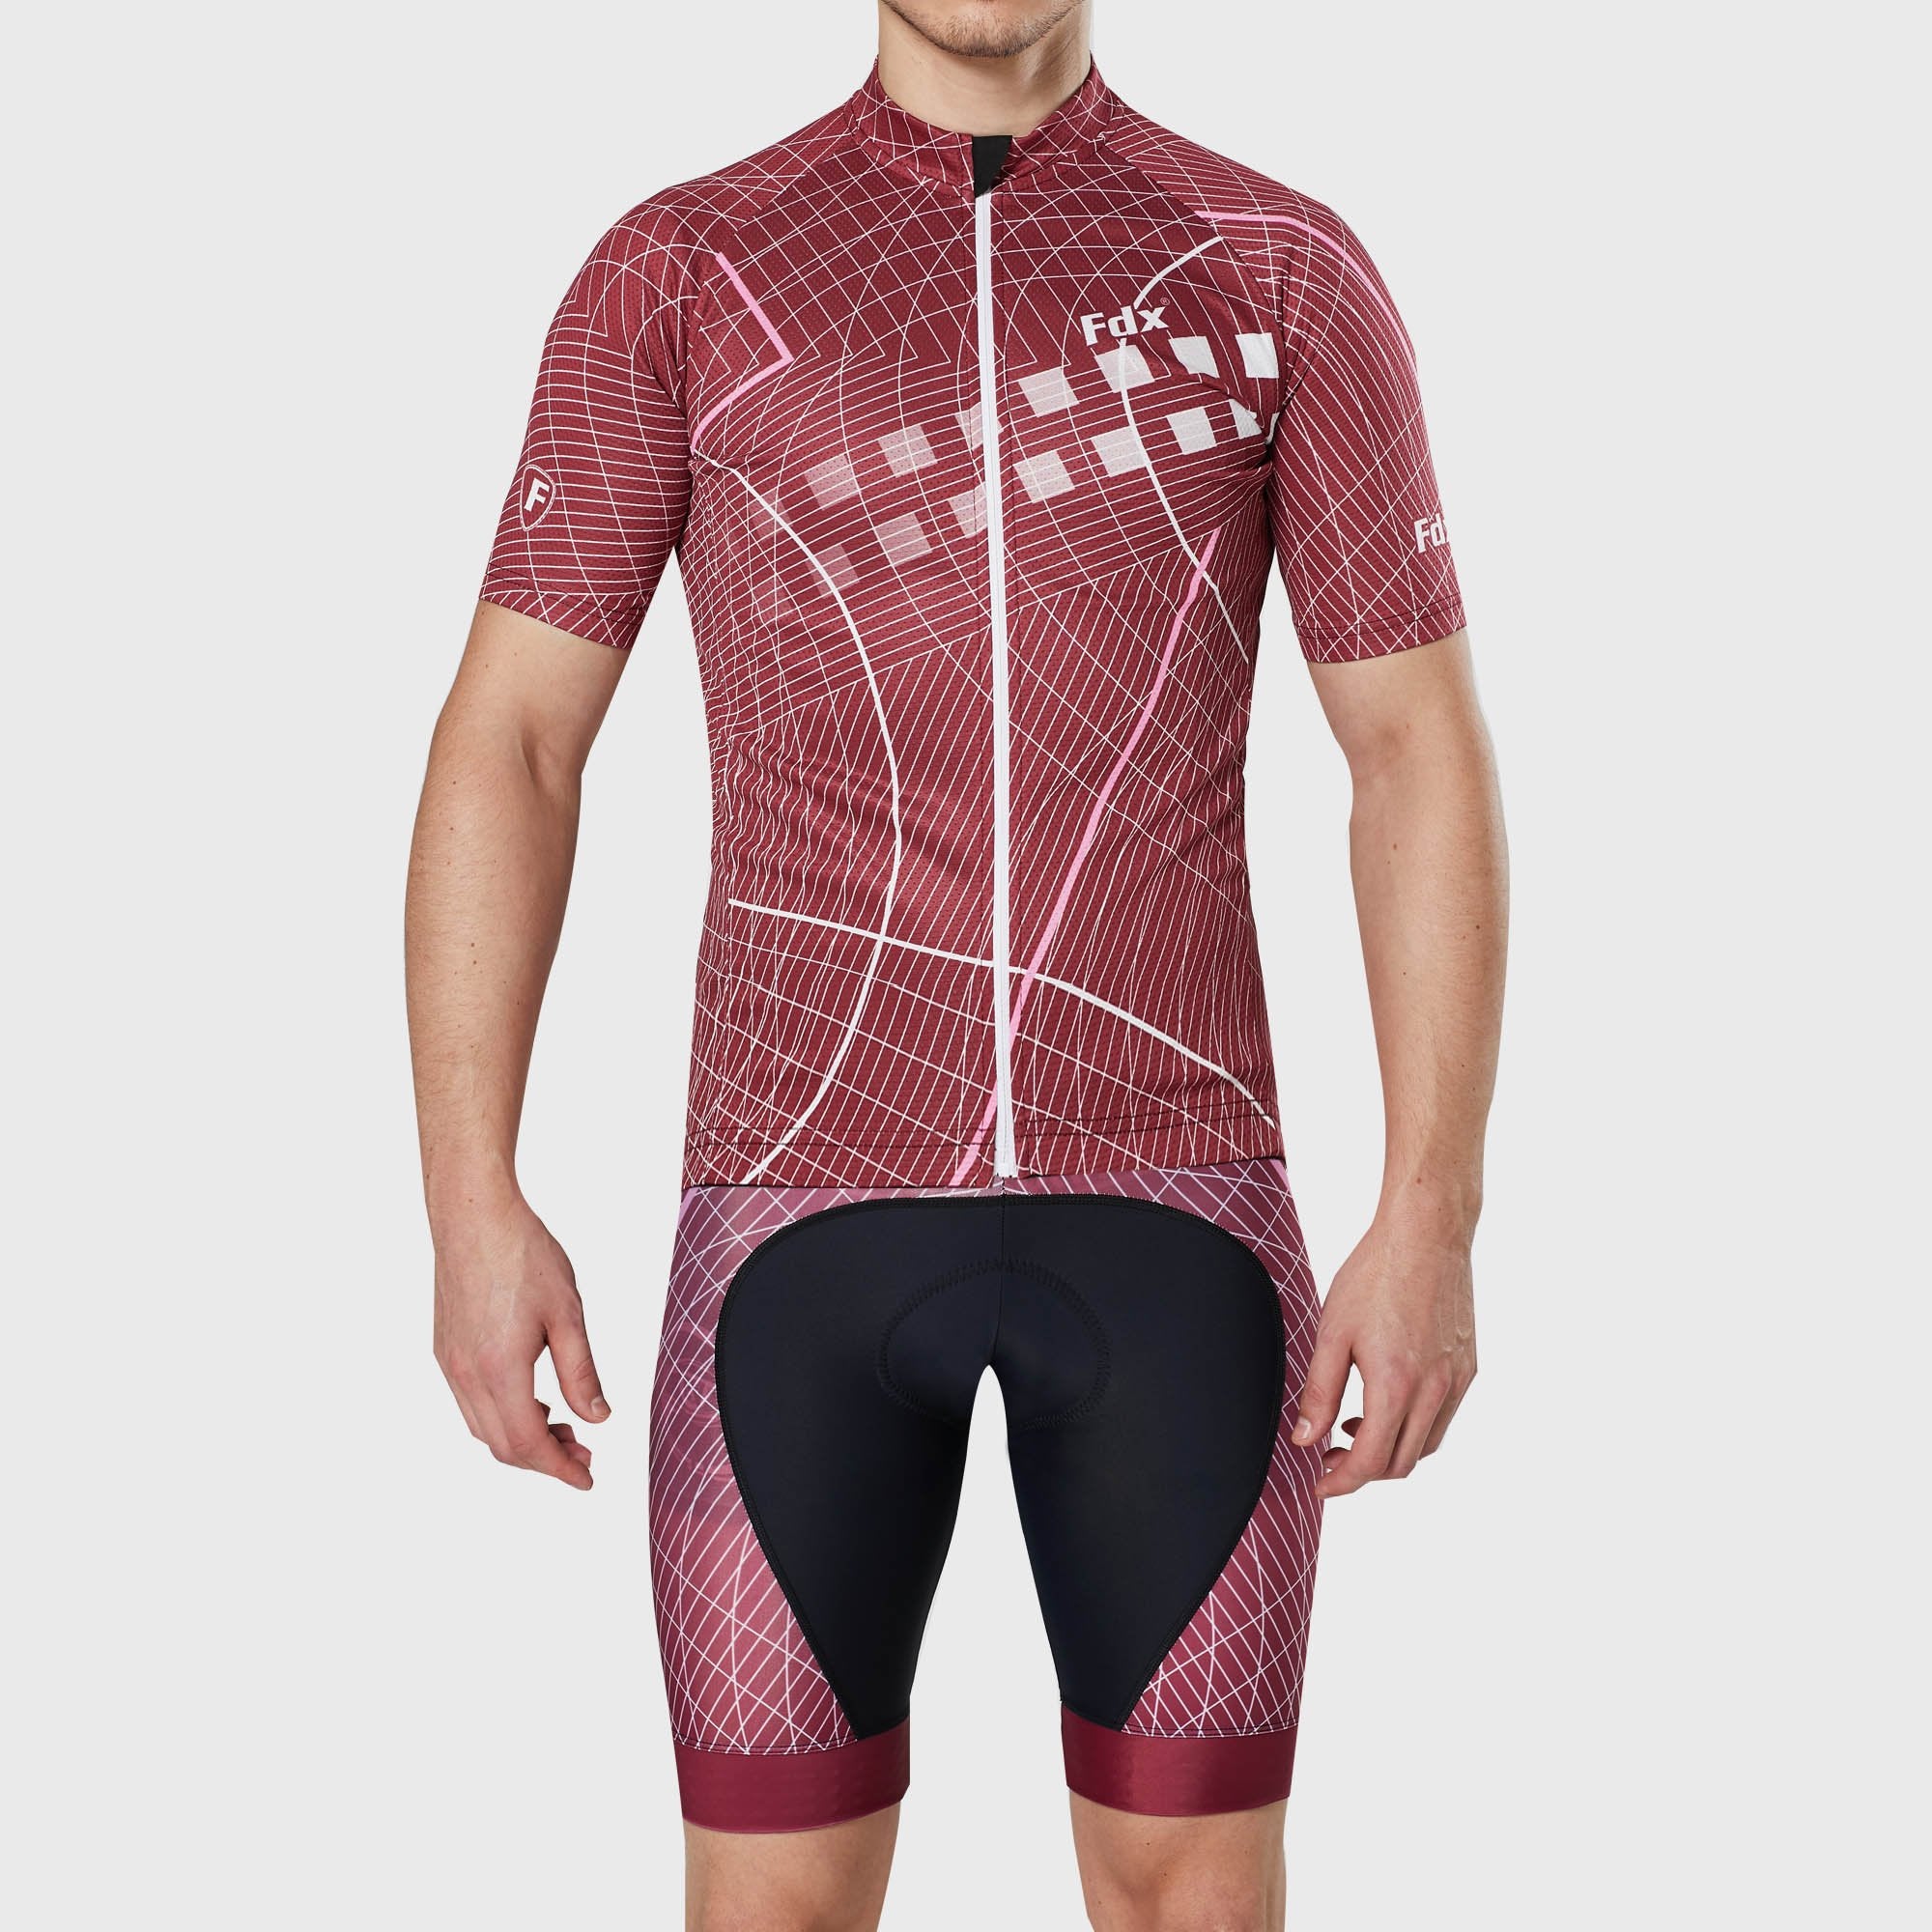 Fdx Red Short Sleeve Mens Cycling Jersey & Gel Padded Bib Shorts Best Summer Road Bike Wear Light Weight, Hi-viz Reflectors & Pockets - Classic II